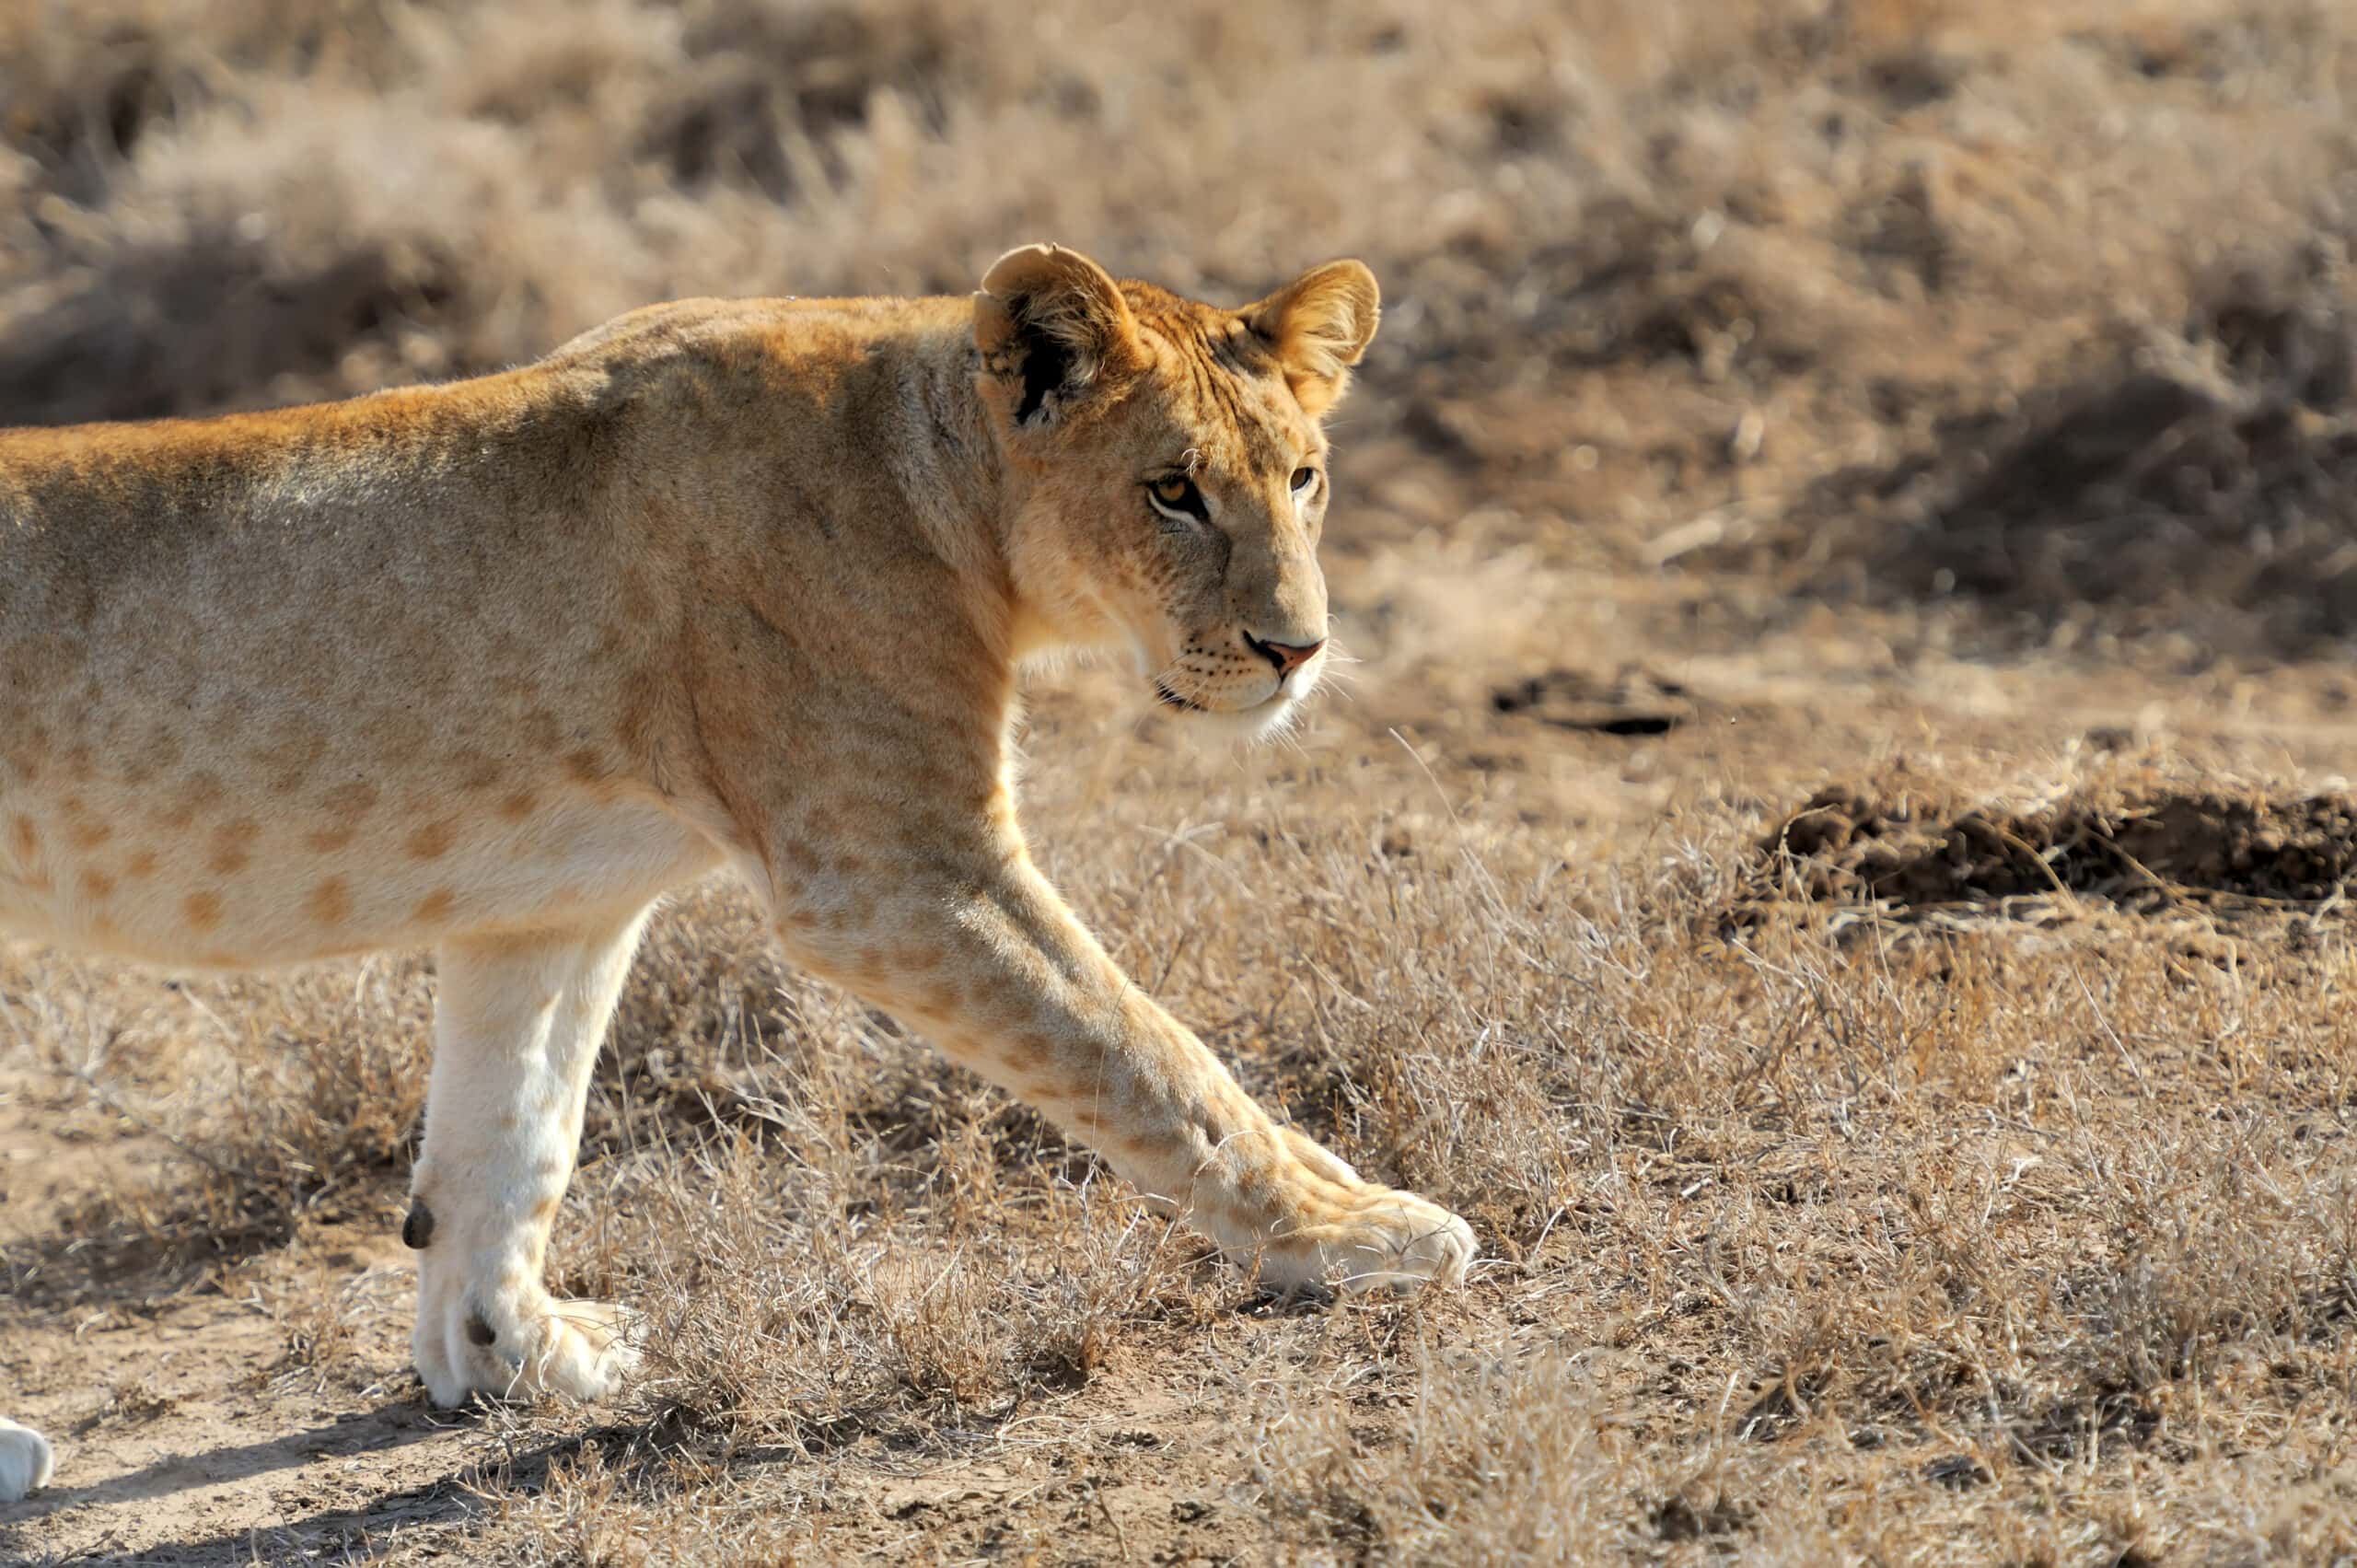 lion in national park of kenya 2021 08 26 15 55 46 utc scaled